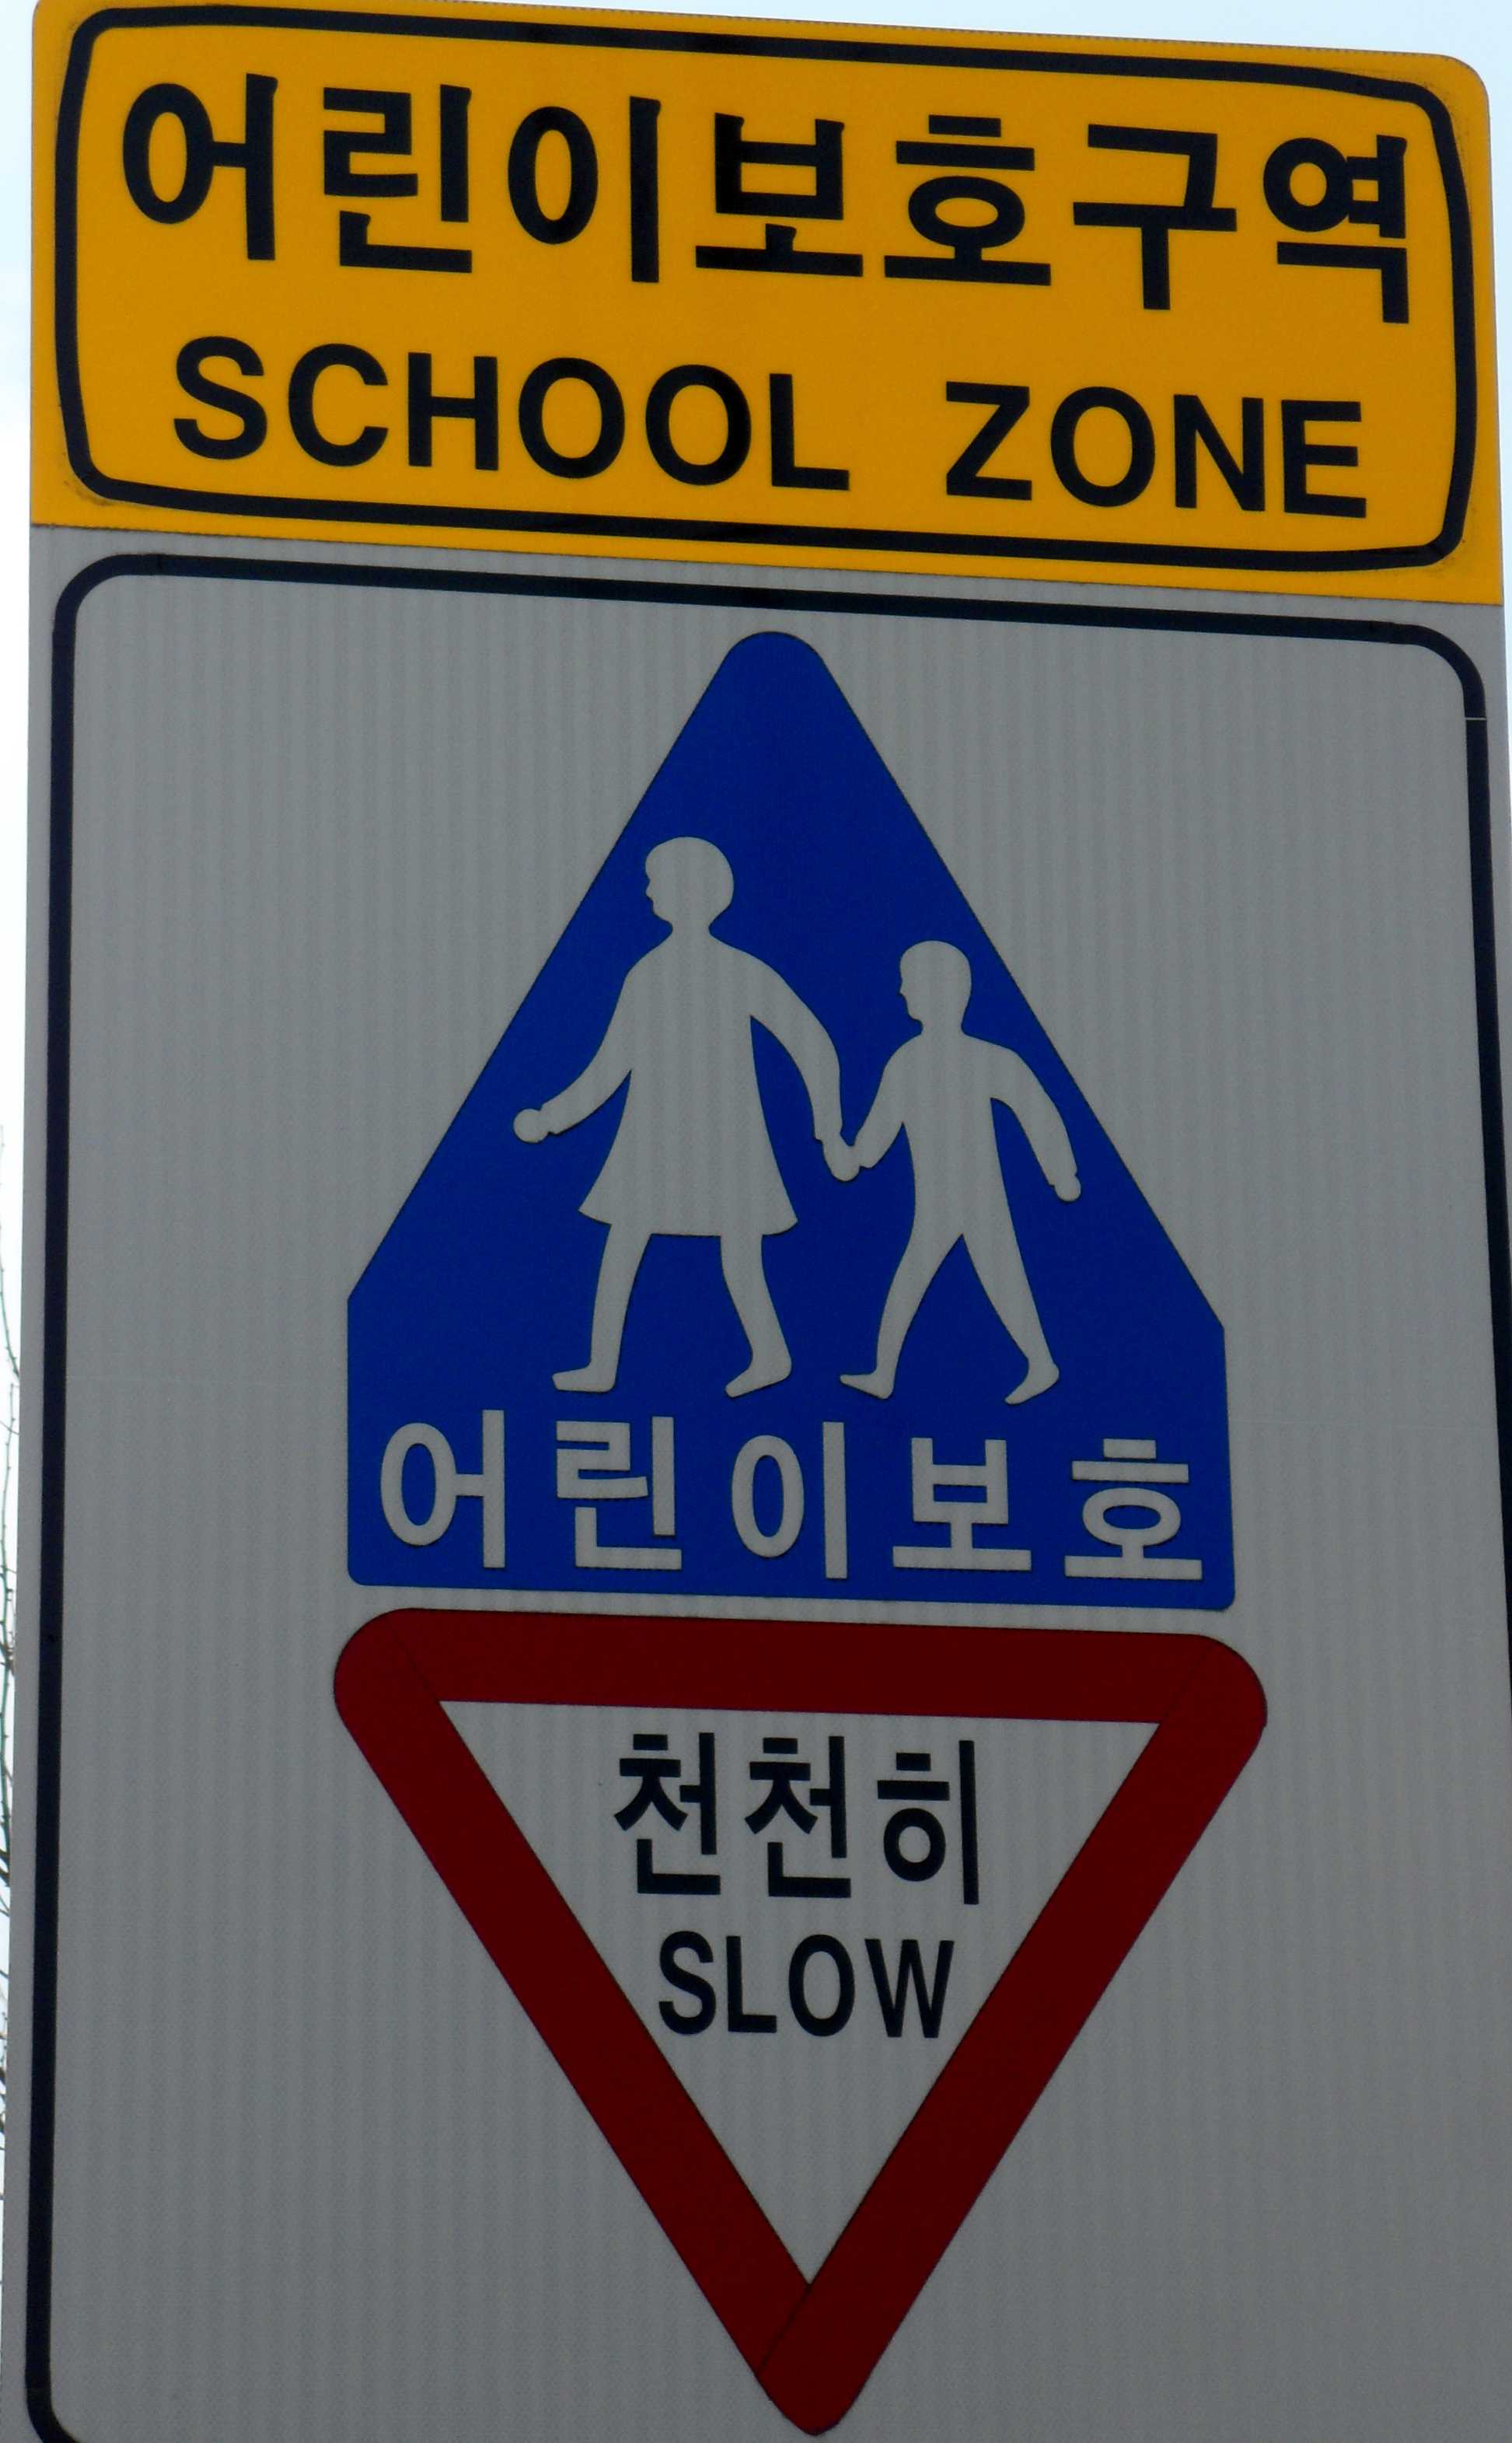 End School Zone 1 Unit School Zone Sign 